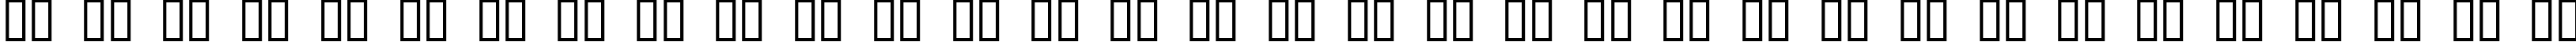 Пример написания русского алфавита шрифтом Finchley